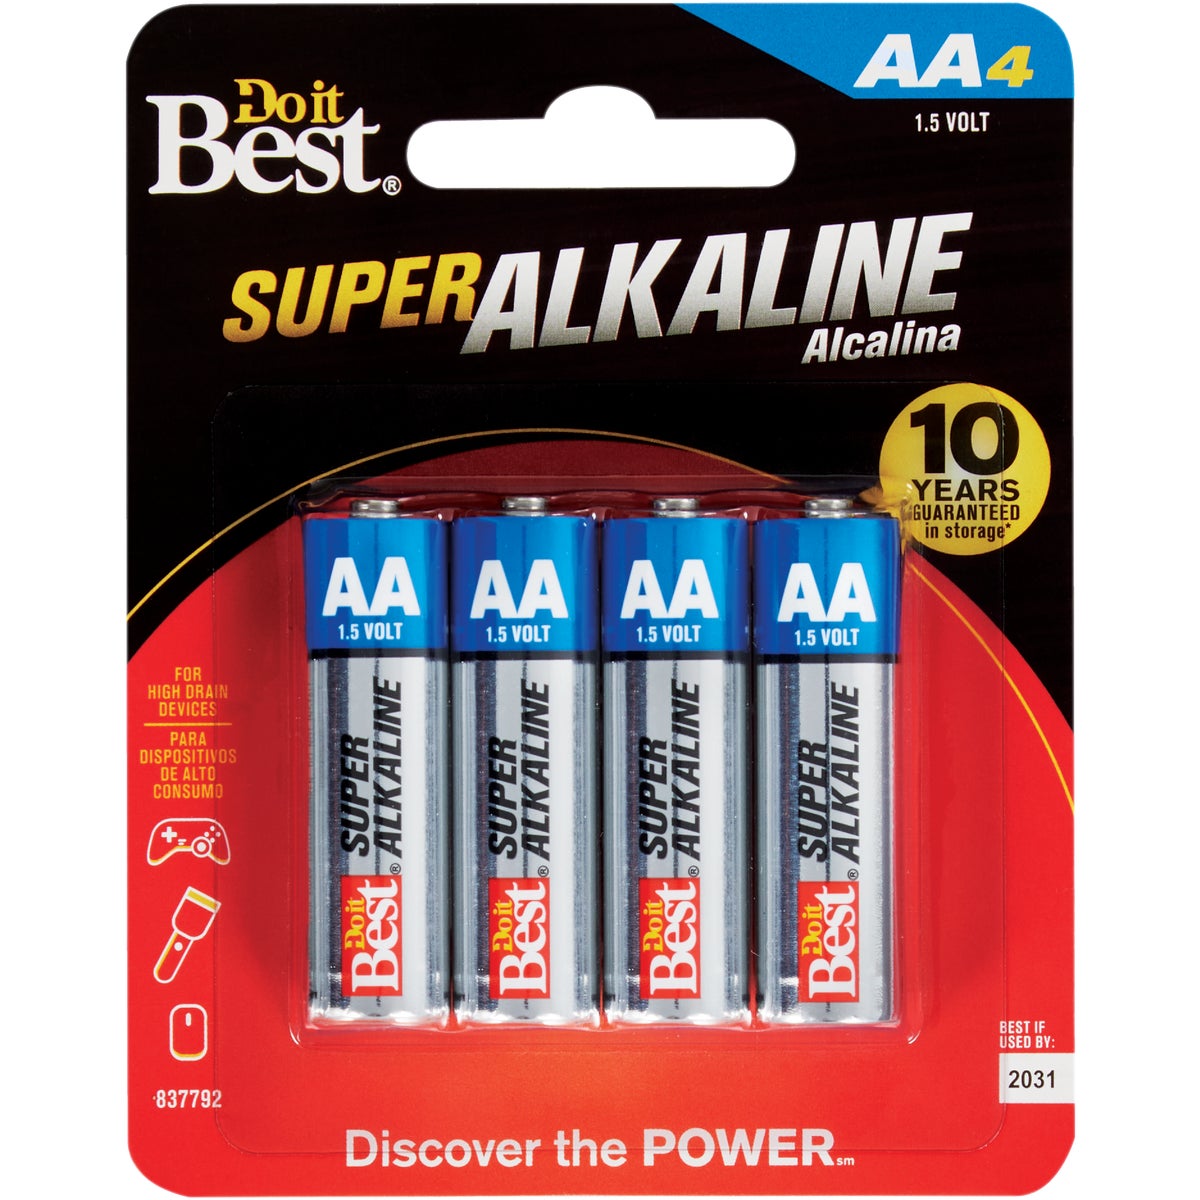 Item 837792, Top-quality AA super alkaline batteries.